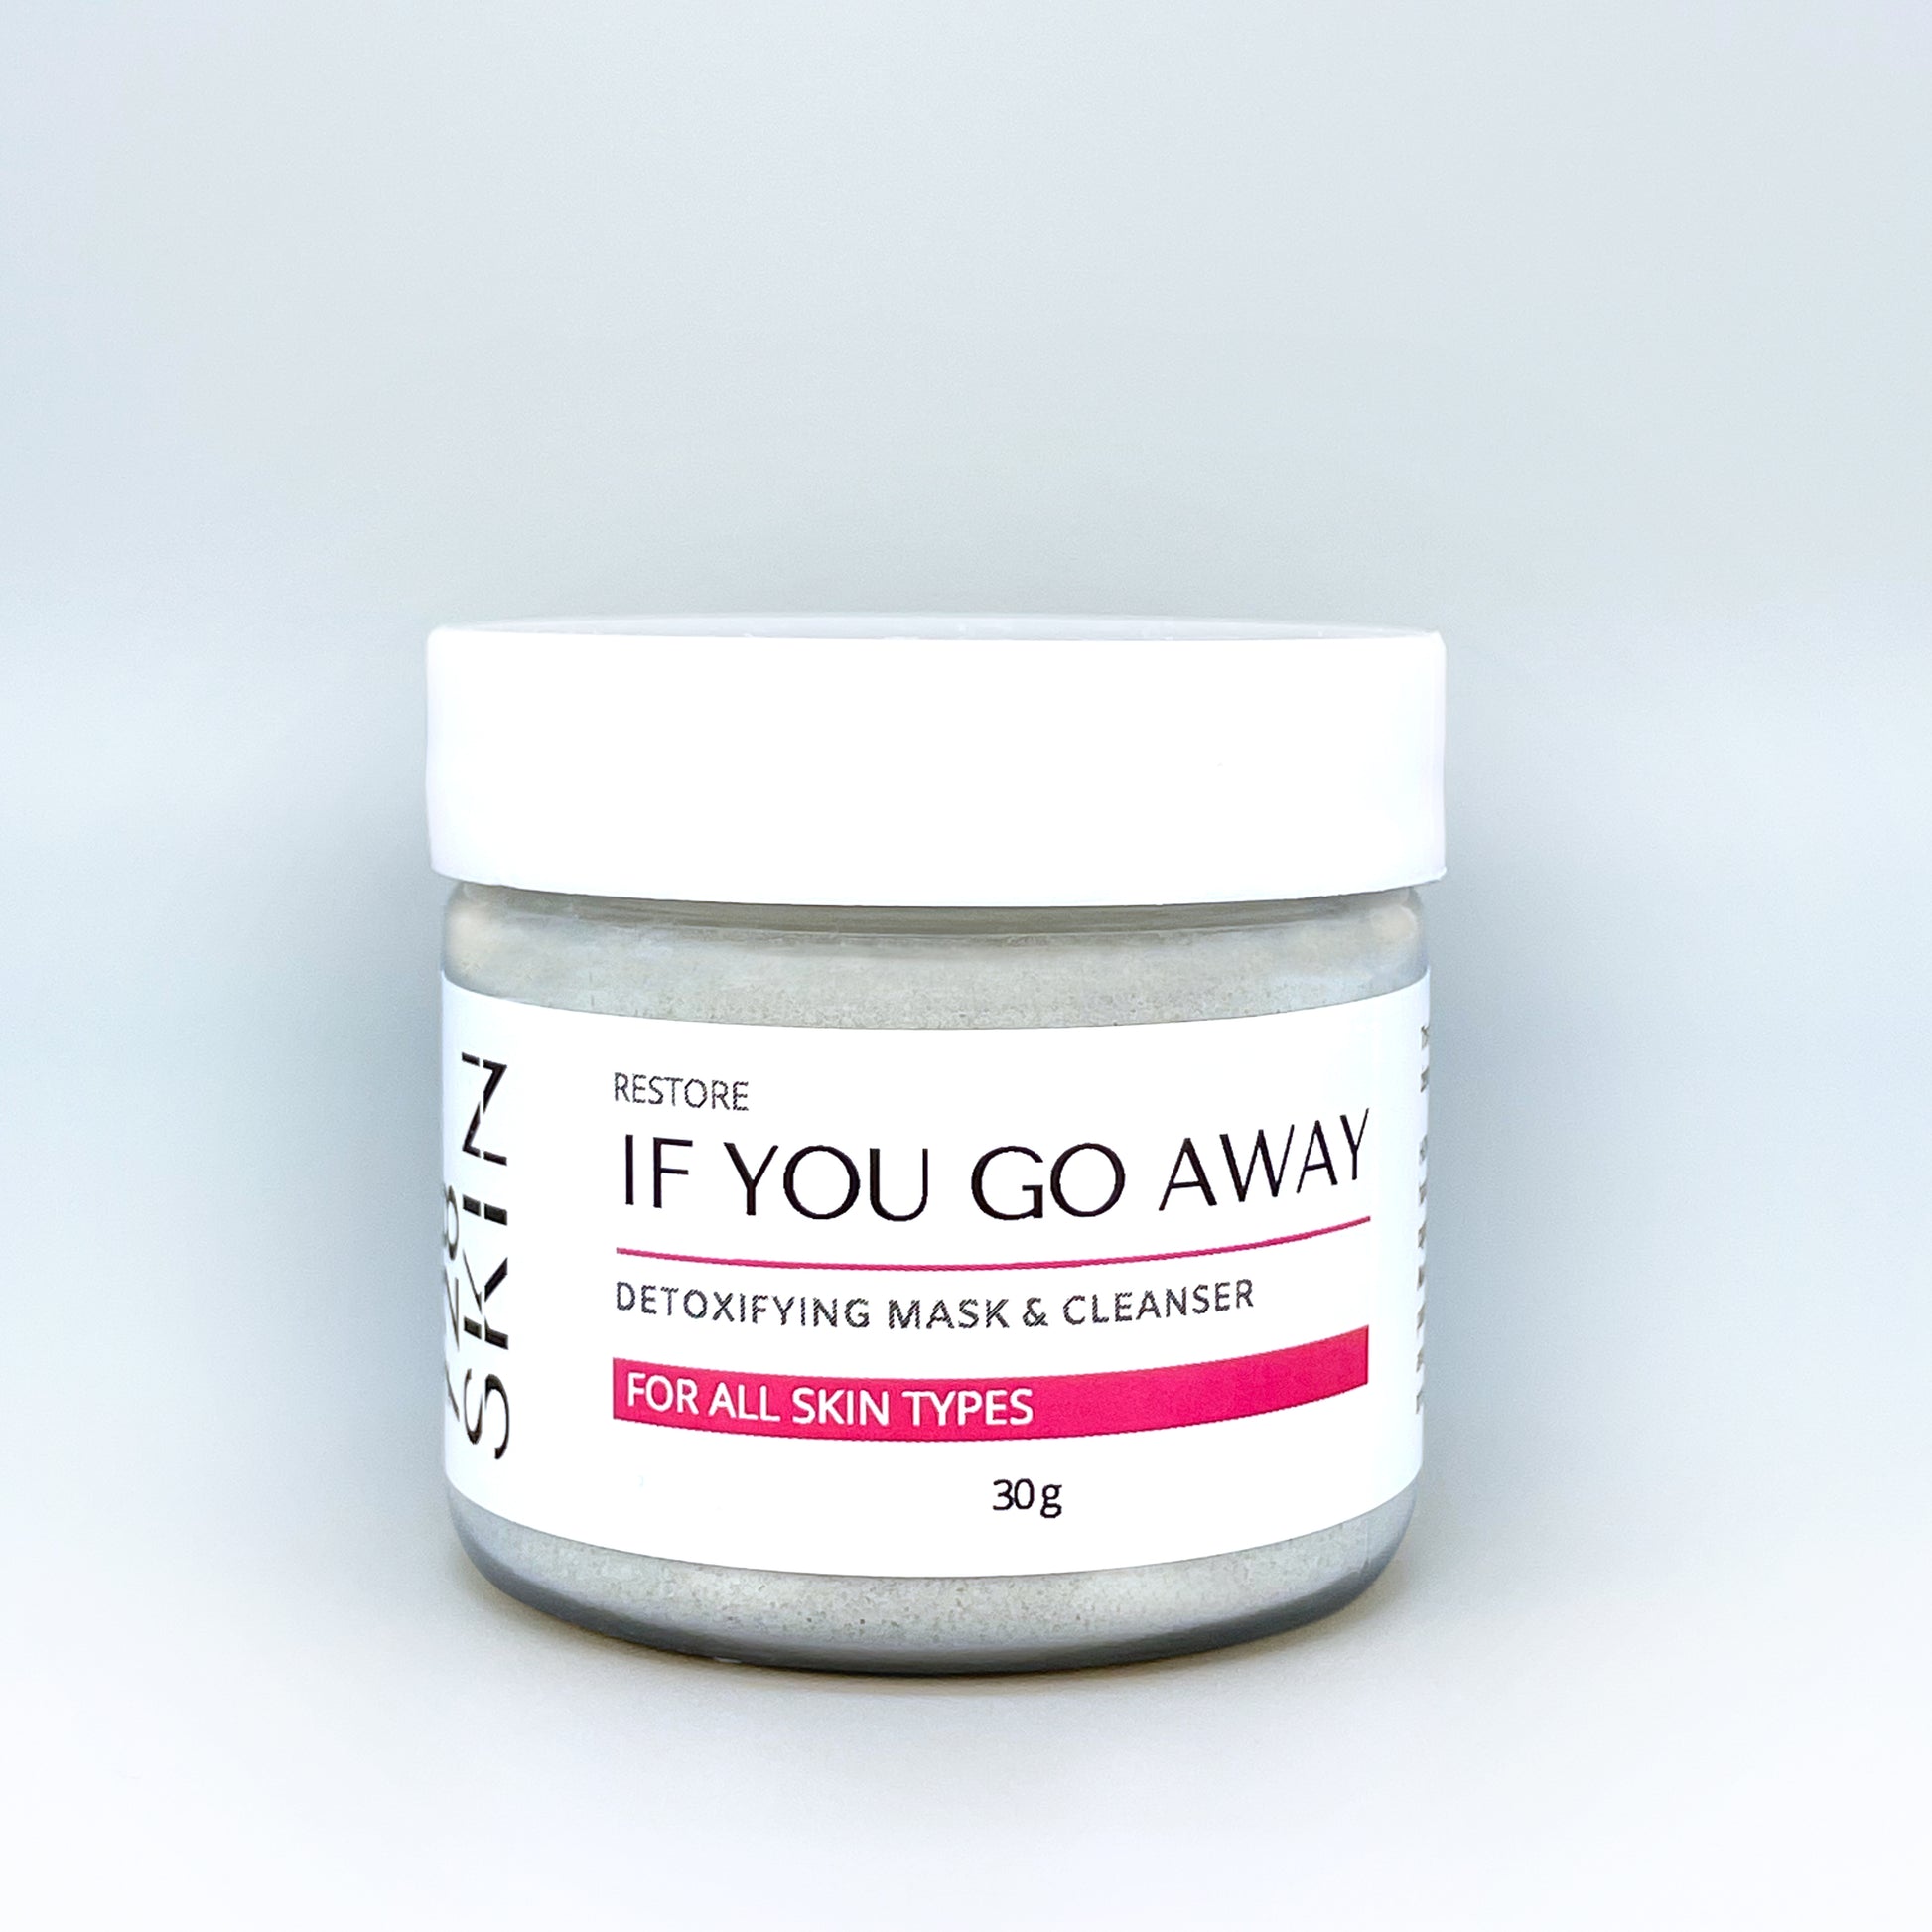 if you go away detoxifying mask & cleanser 30g jar